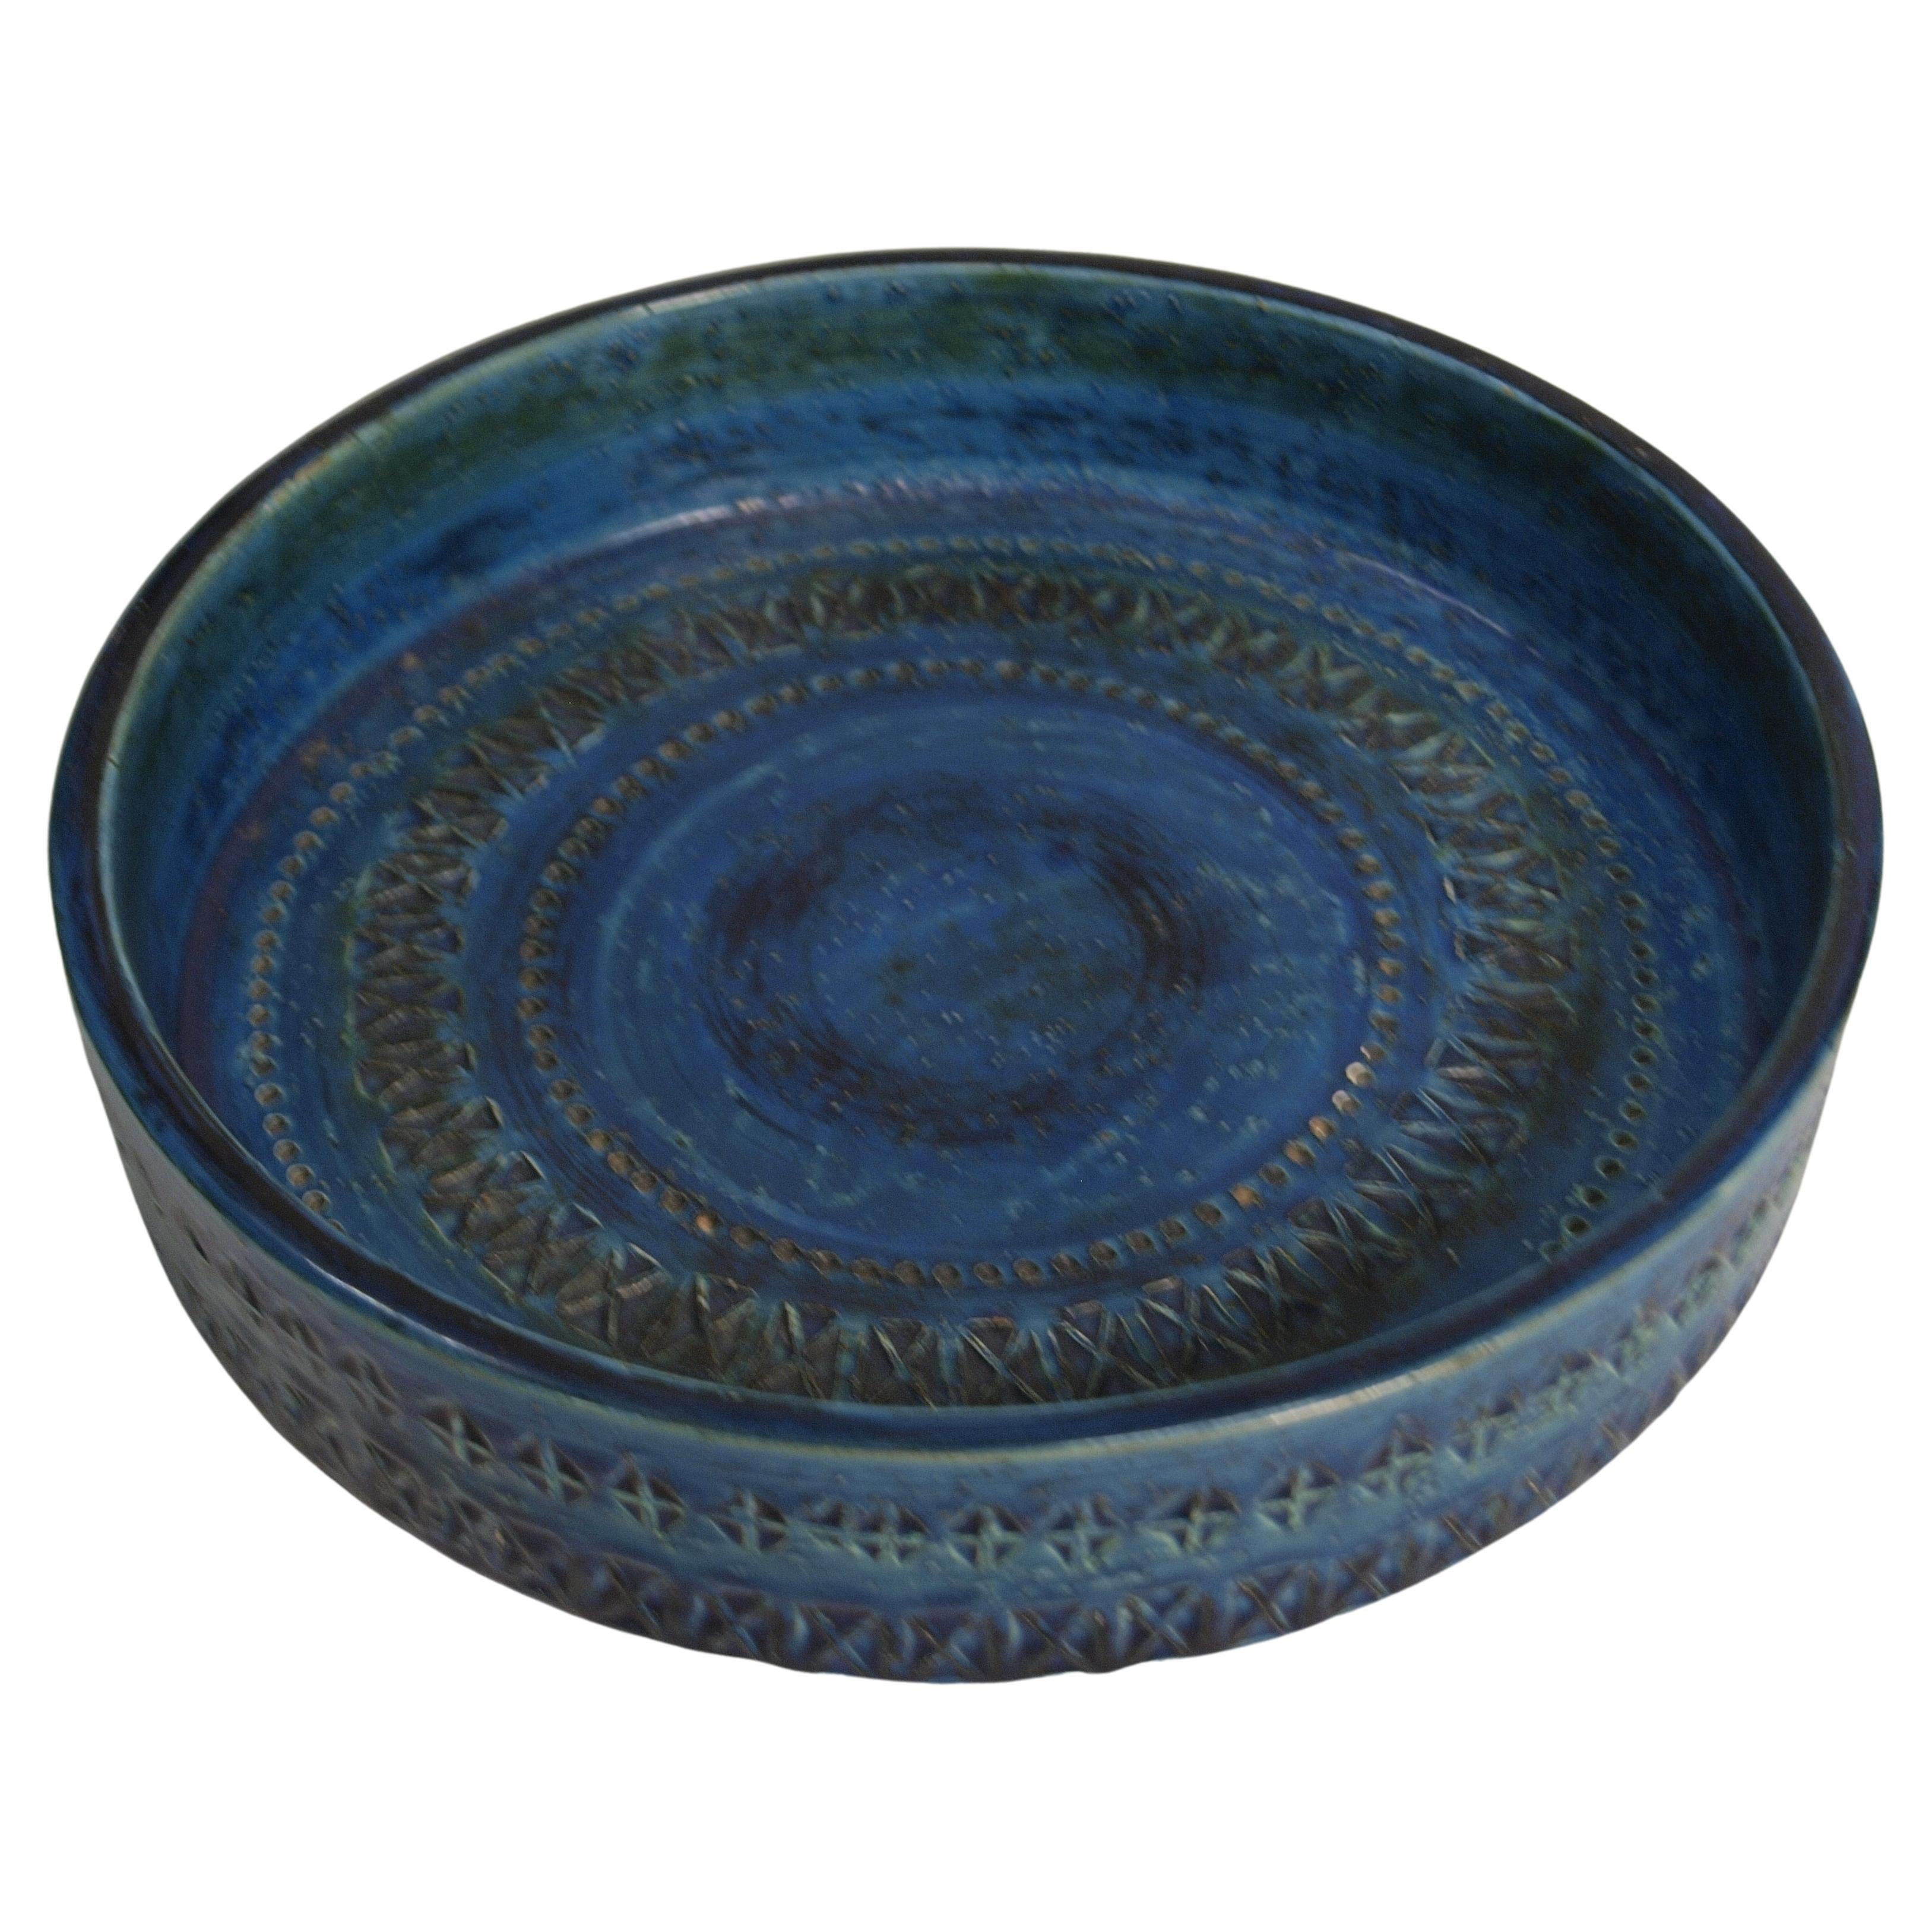 Aldo Londi Circular Ceramic Bowl, Blue Glazed, Bitossi, Mid-20th Century For Sale